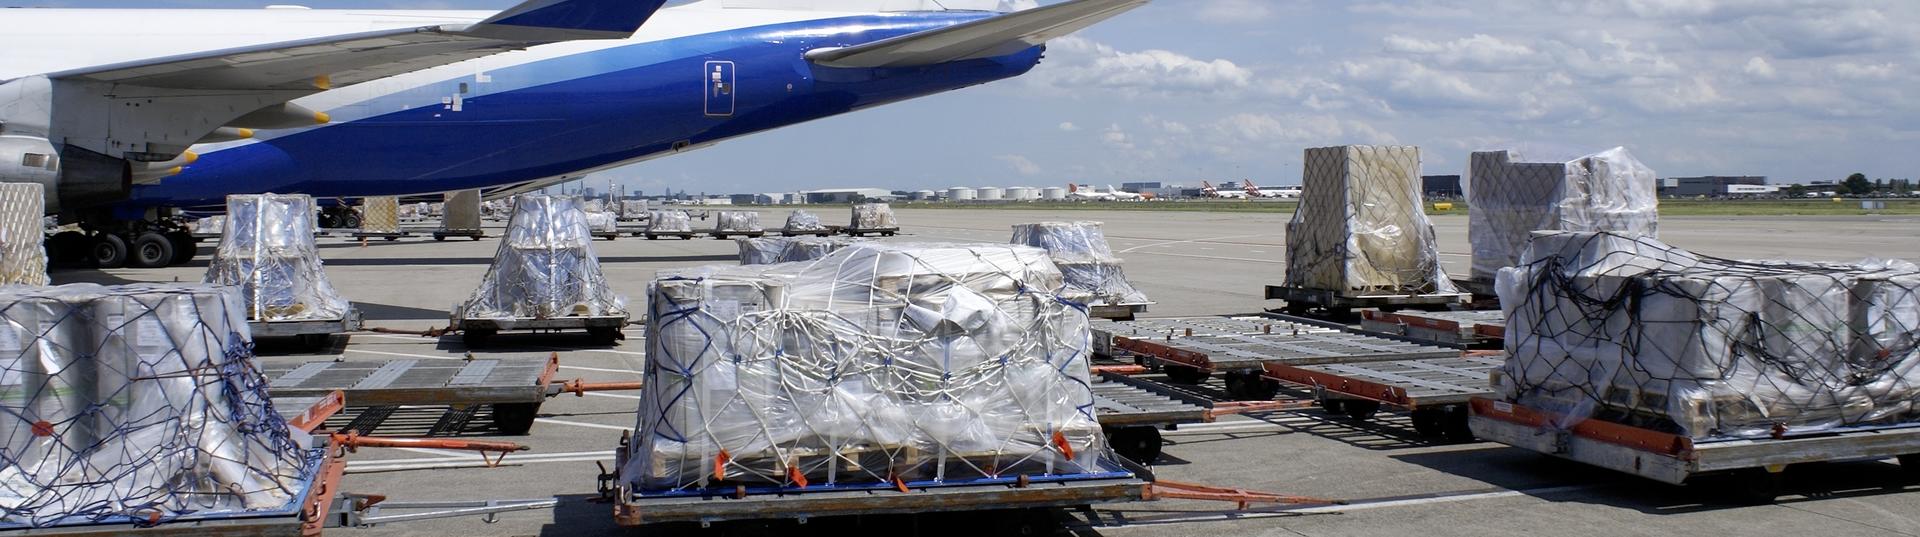 airplane cargo